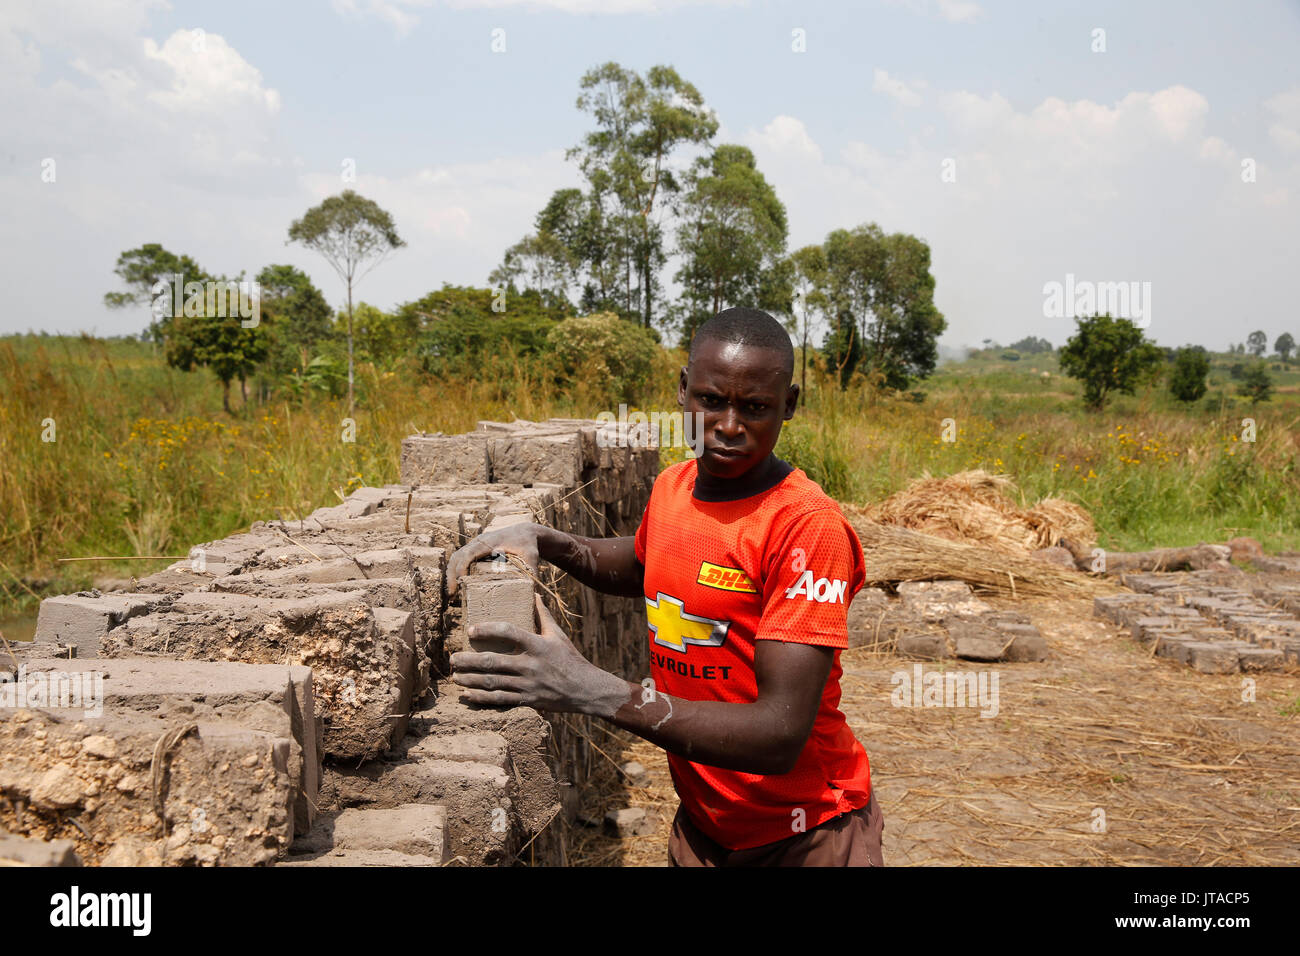 Brick factory financed by a loan from ENCOT microfinance, Uganda, Africa Stock Photo